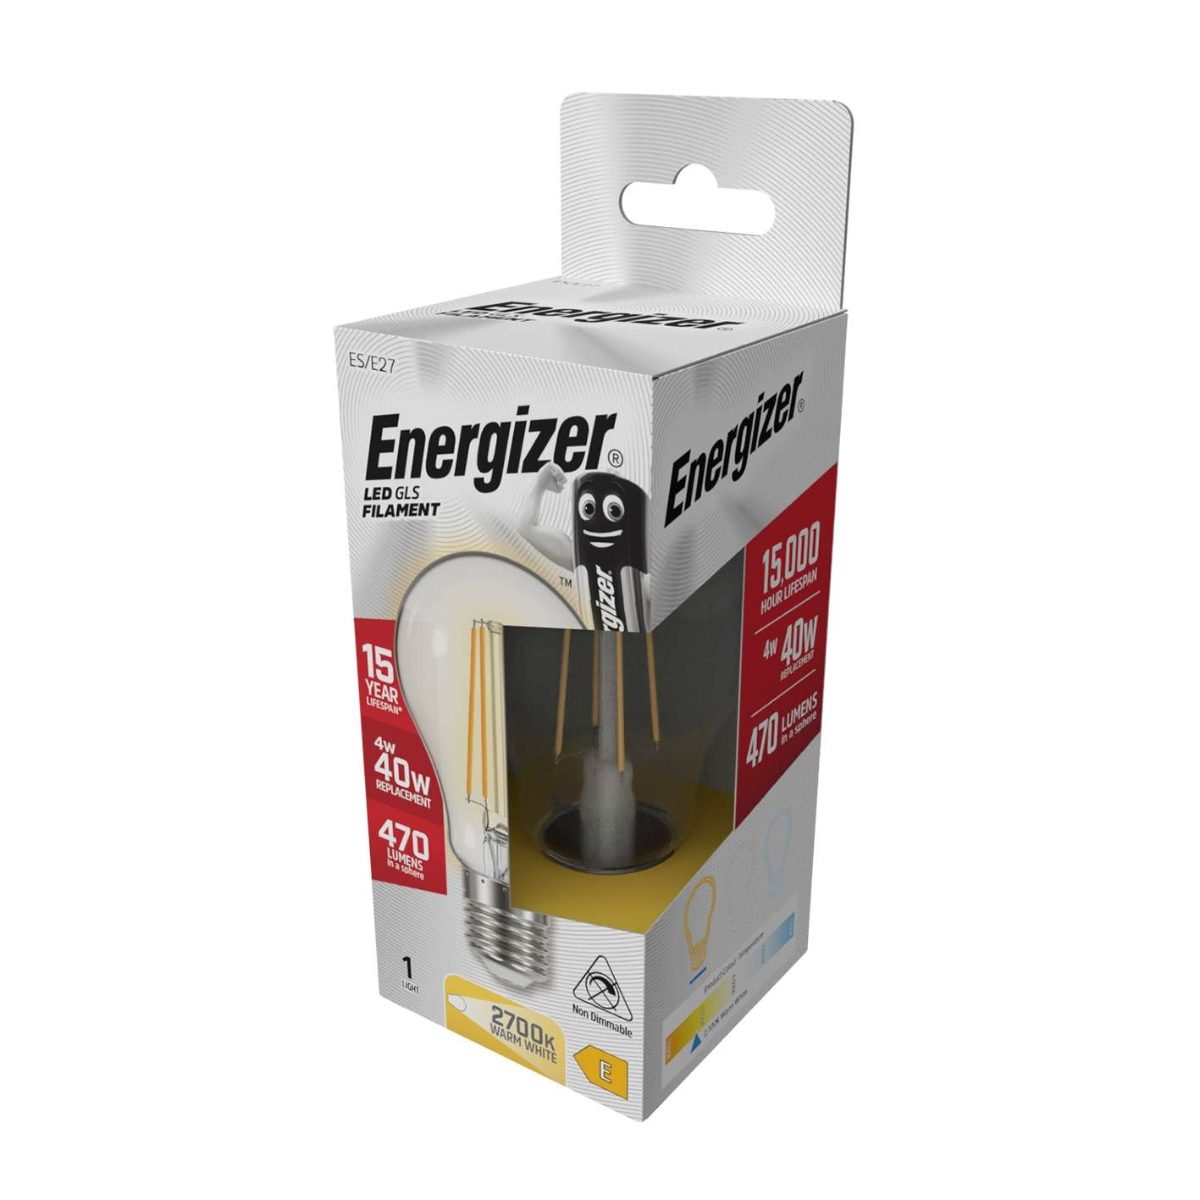 Energizer LED Filament GLS E27 (ES) 470 Lumens 4W 2,700K (Warm White), Box of 1